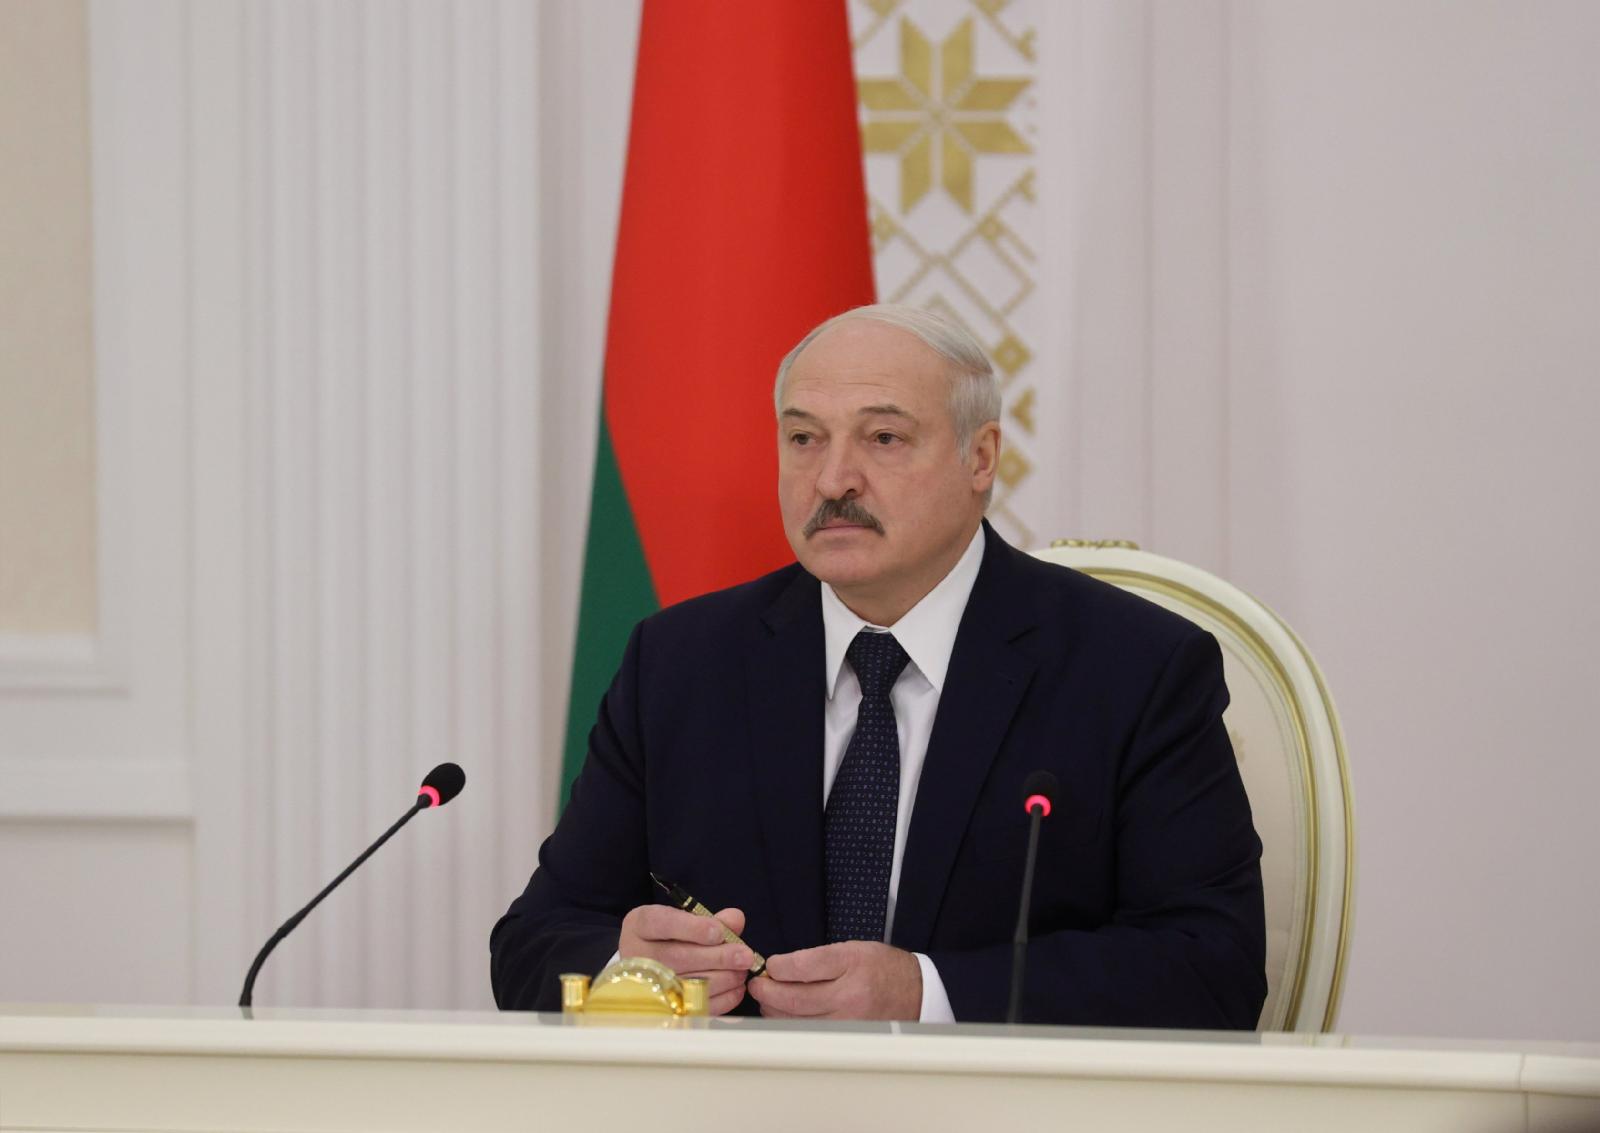 Catholic bishop accuses Belarus president of slander